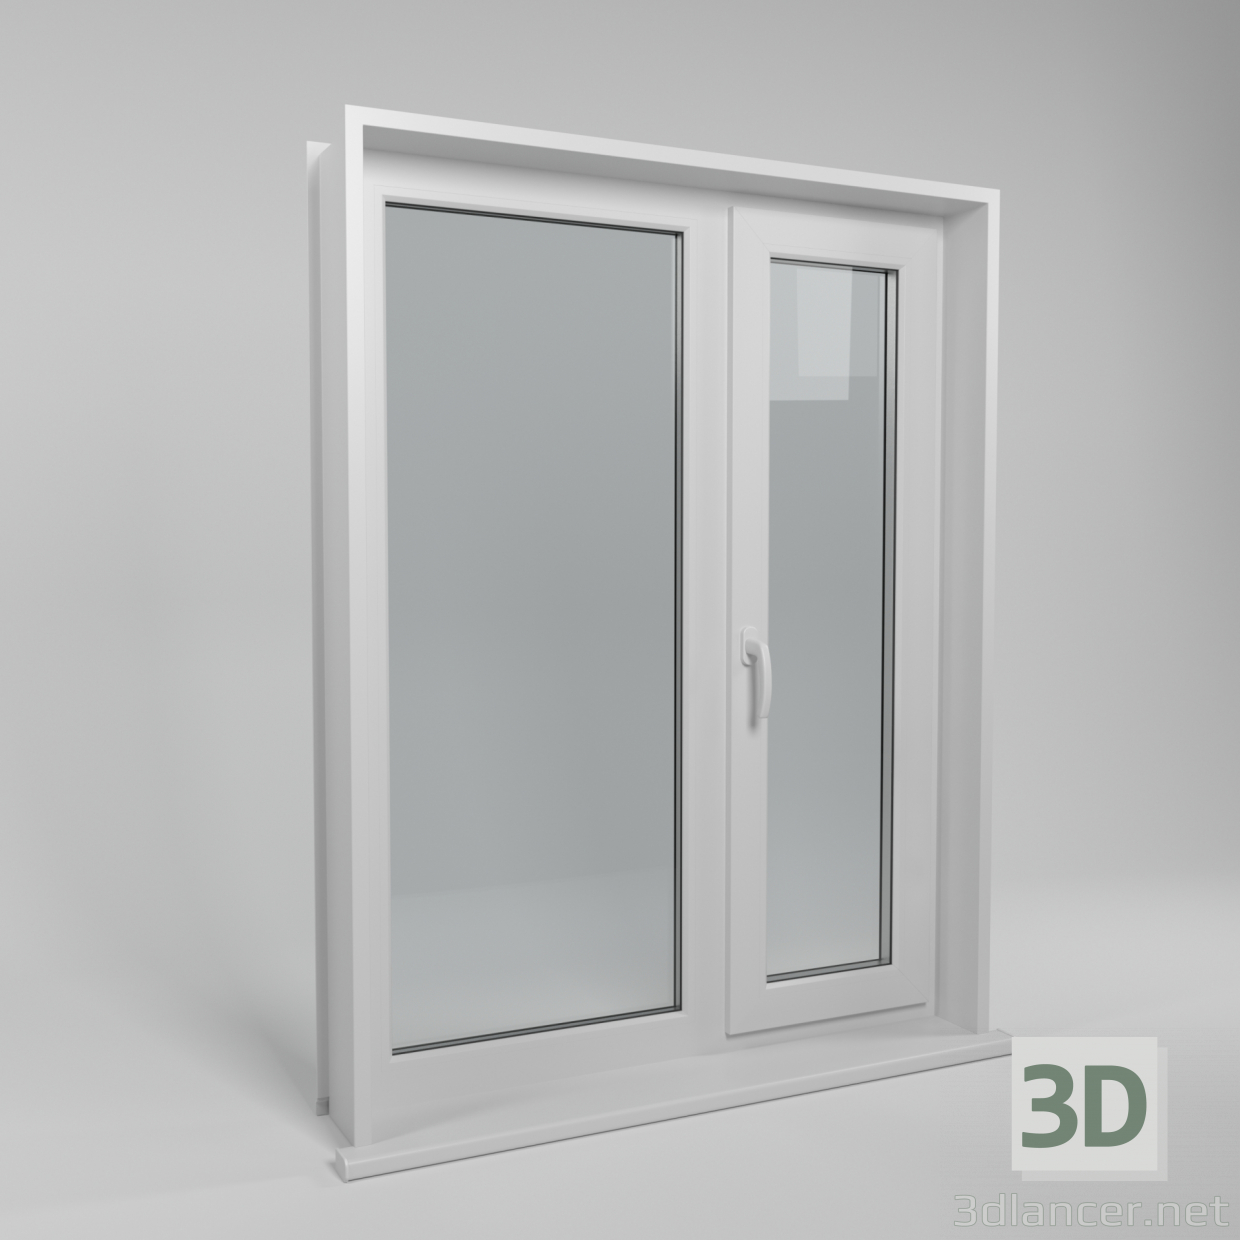 Fenster - Fenster 3D-Modell kaufen - Rendern